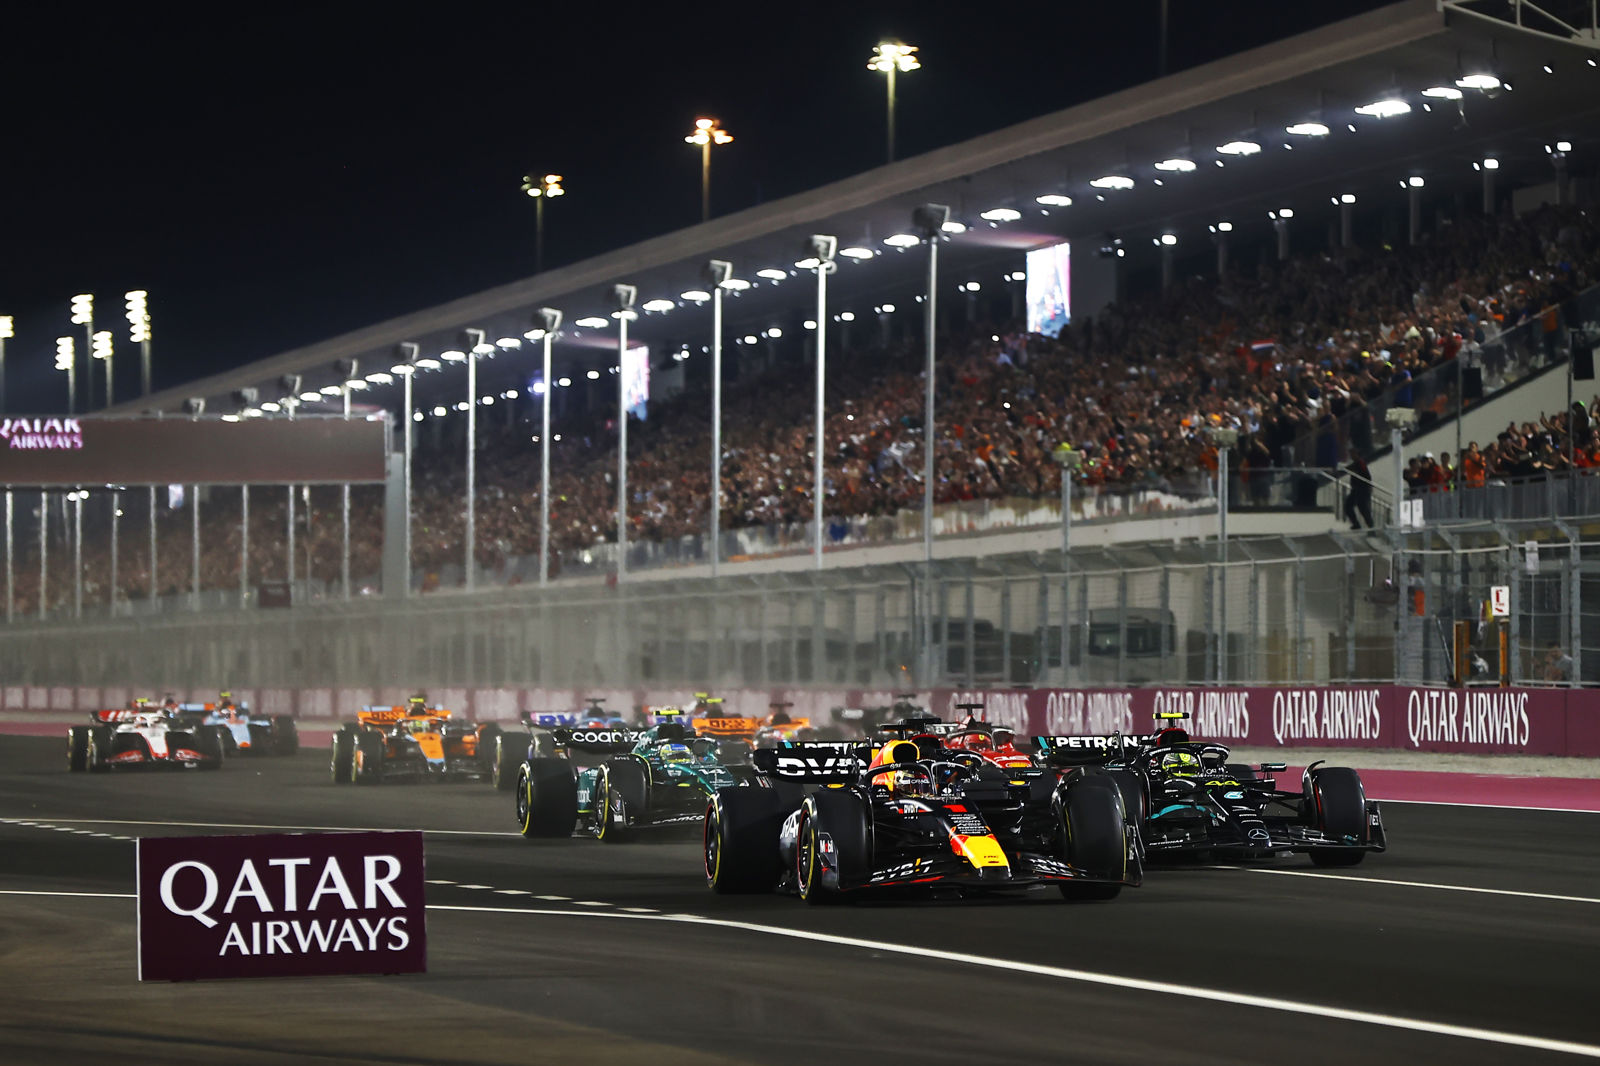 Combinatiereis F1 Qatar en F1 Abu Dhabi, 12 dagen